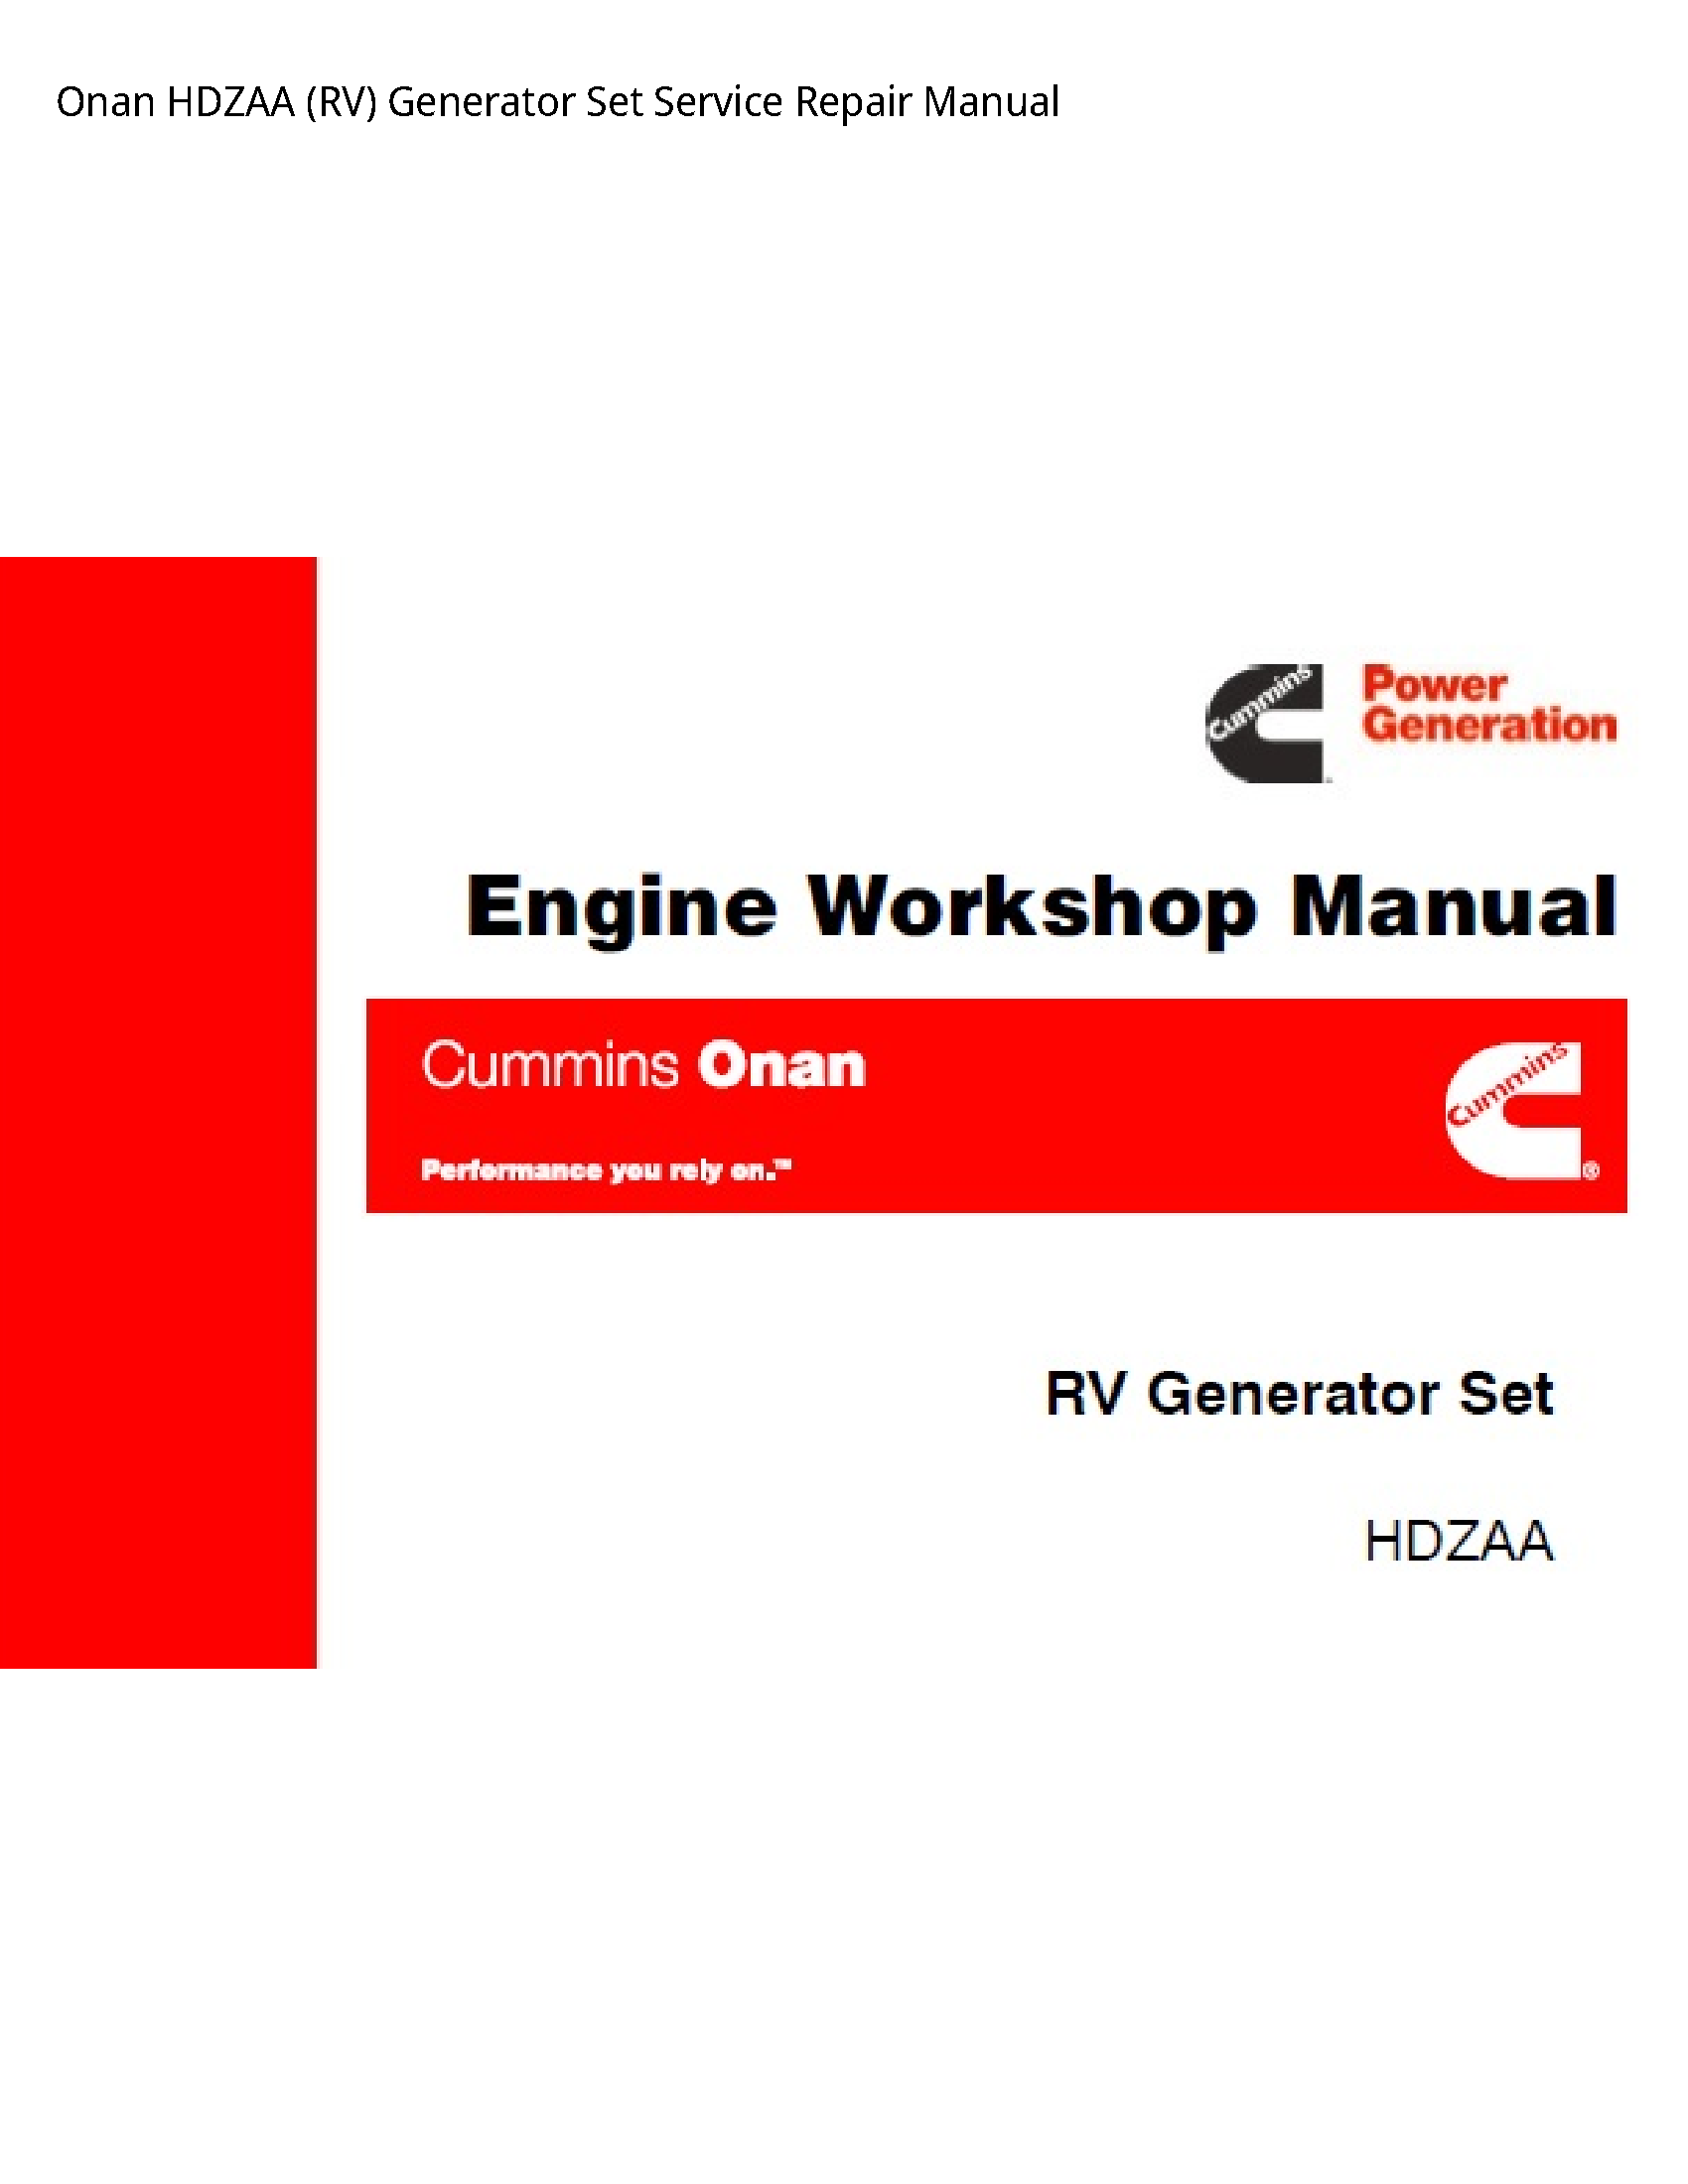 Onan HDZAA (RV) Generator Set manual